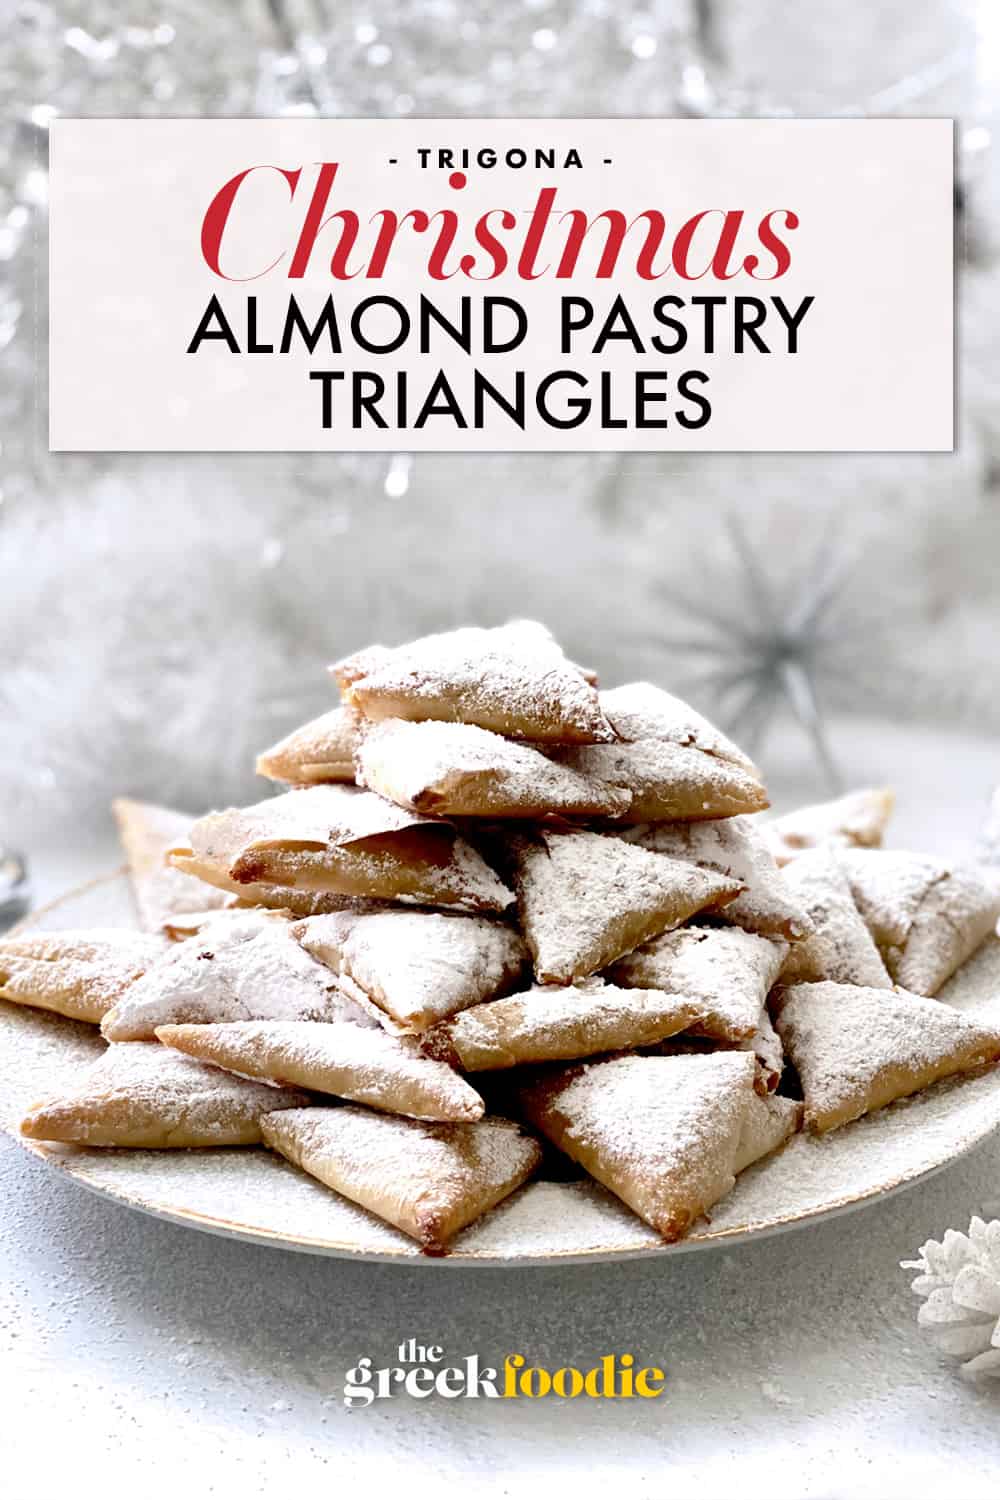 Christmas Almond Pastry Triangles - Trigona